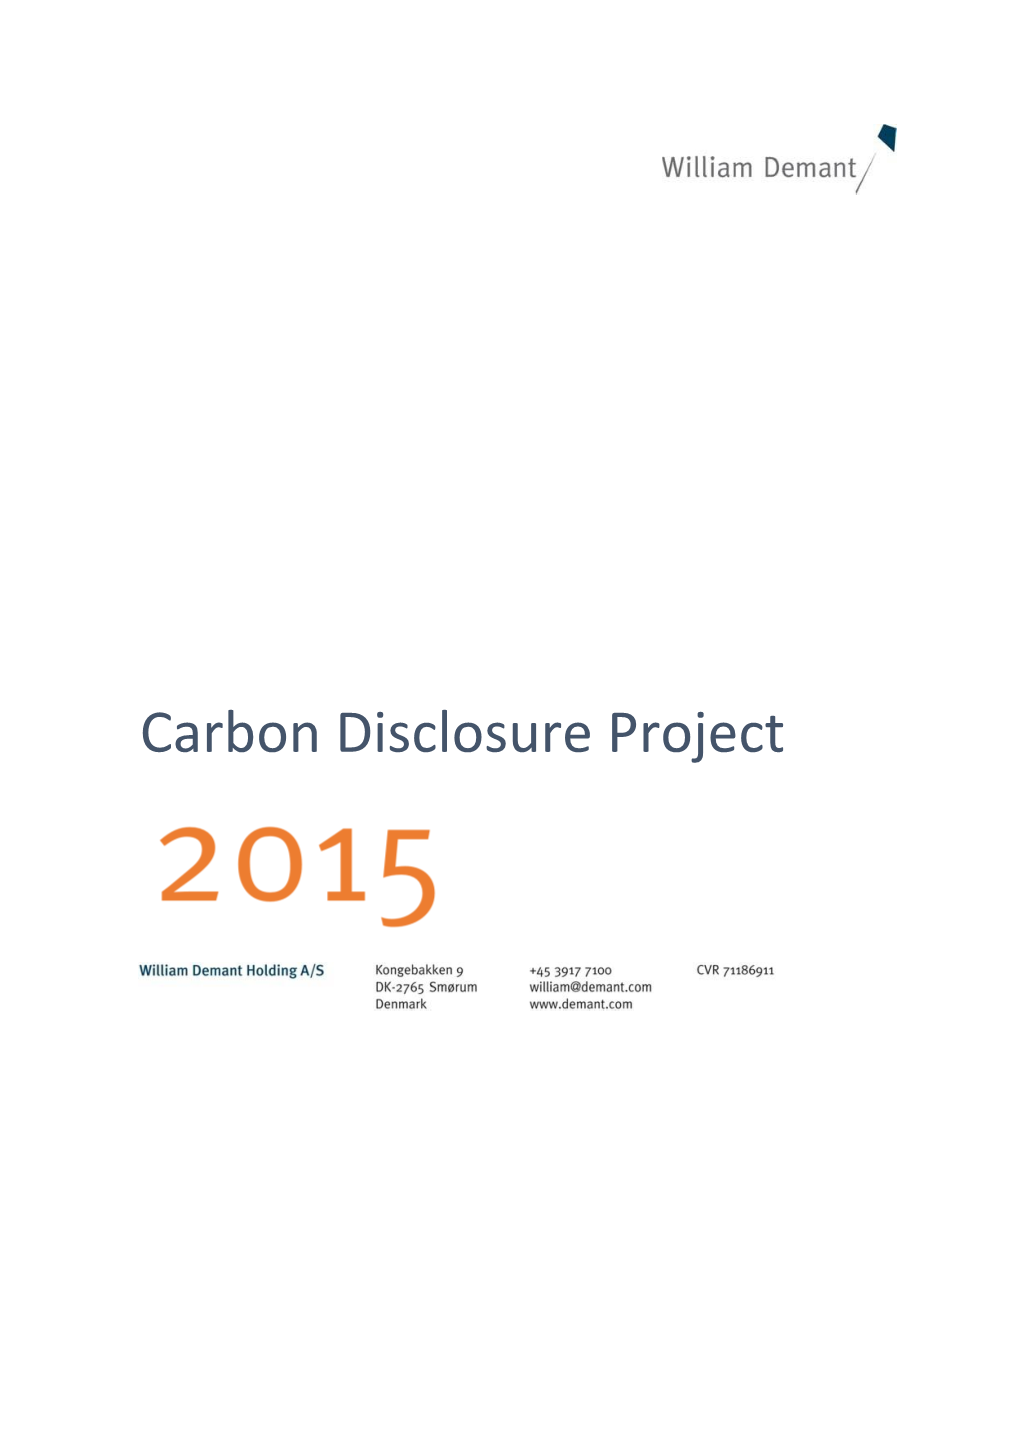 Carbon Disclosure Project 2015